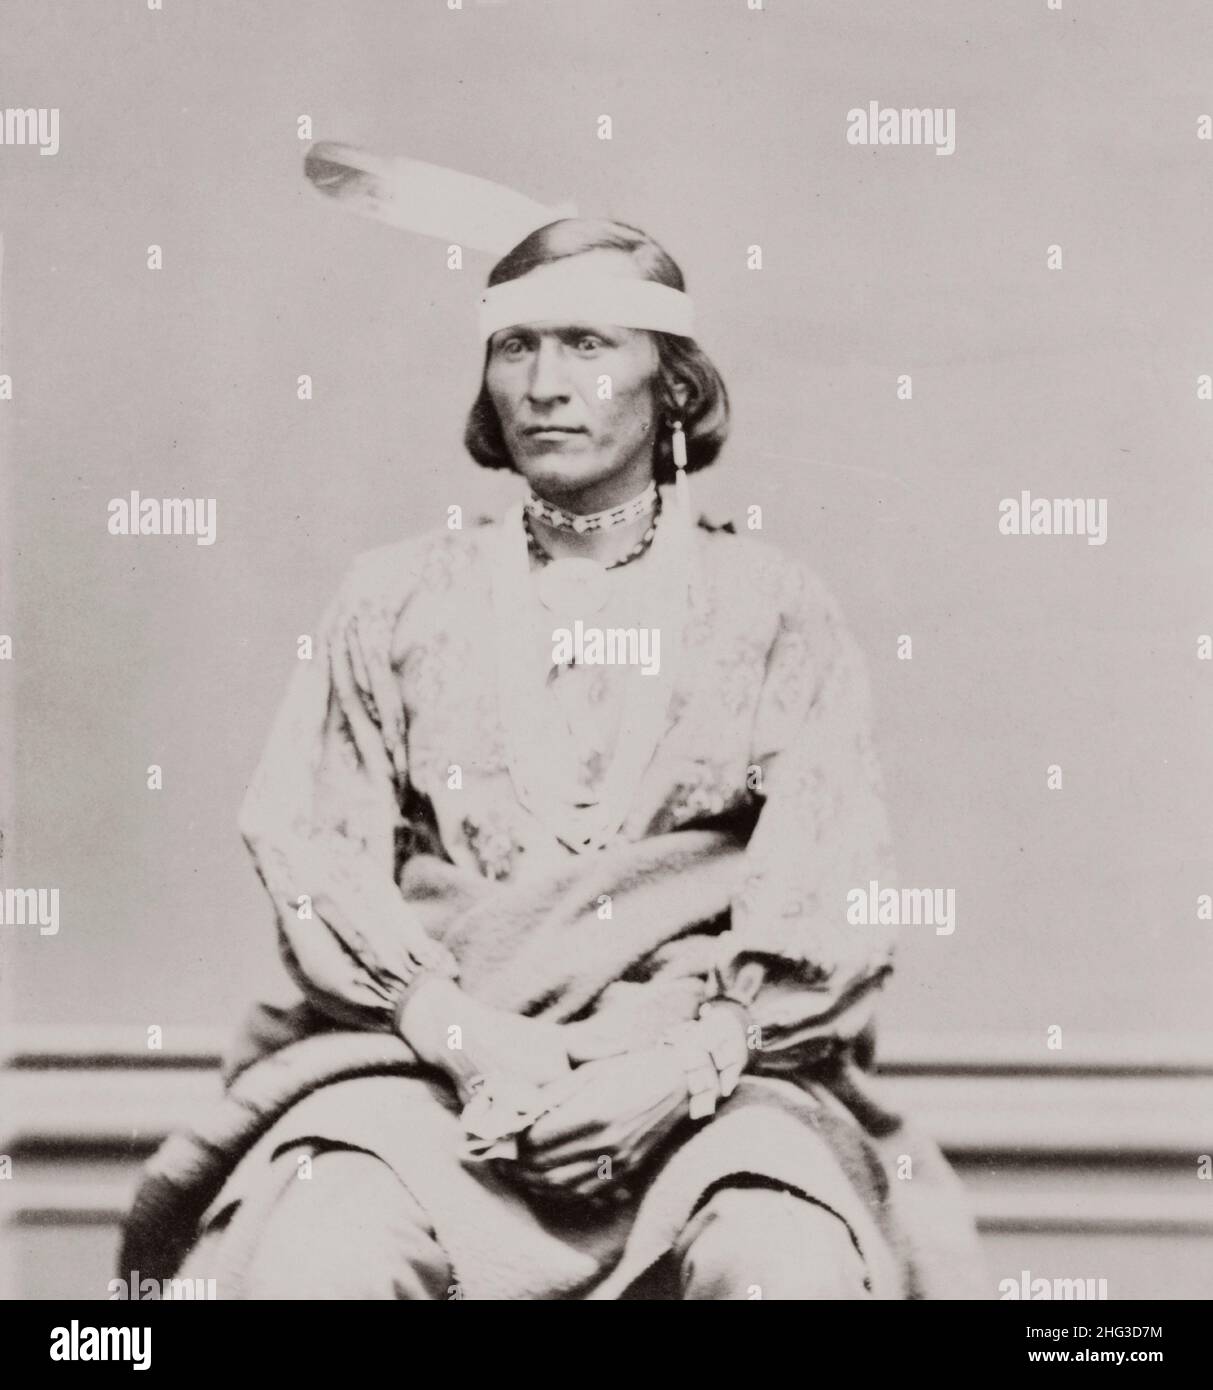 The One Horn. Winnebago man, half-length portrait. USA. 1868-1880 Stock Photo